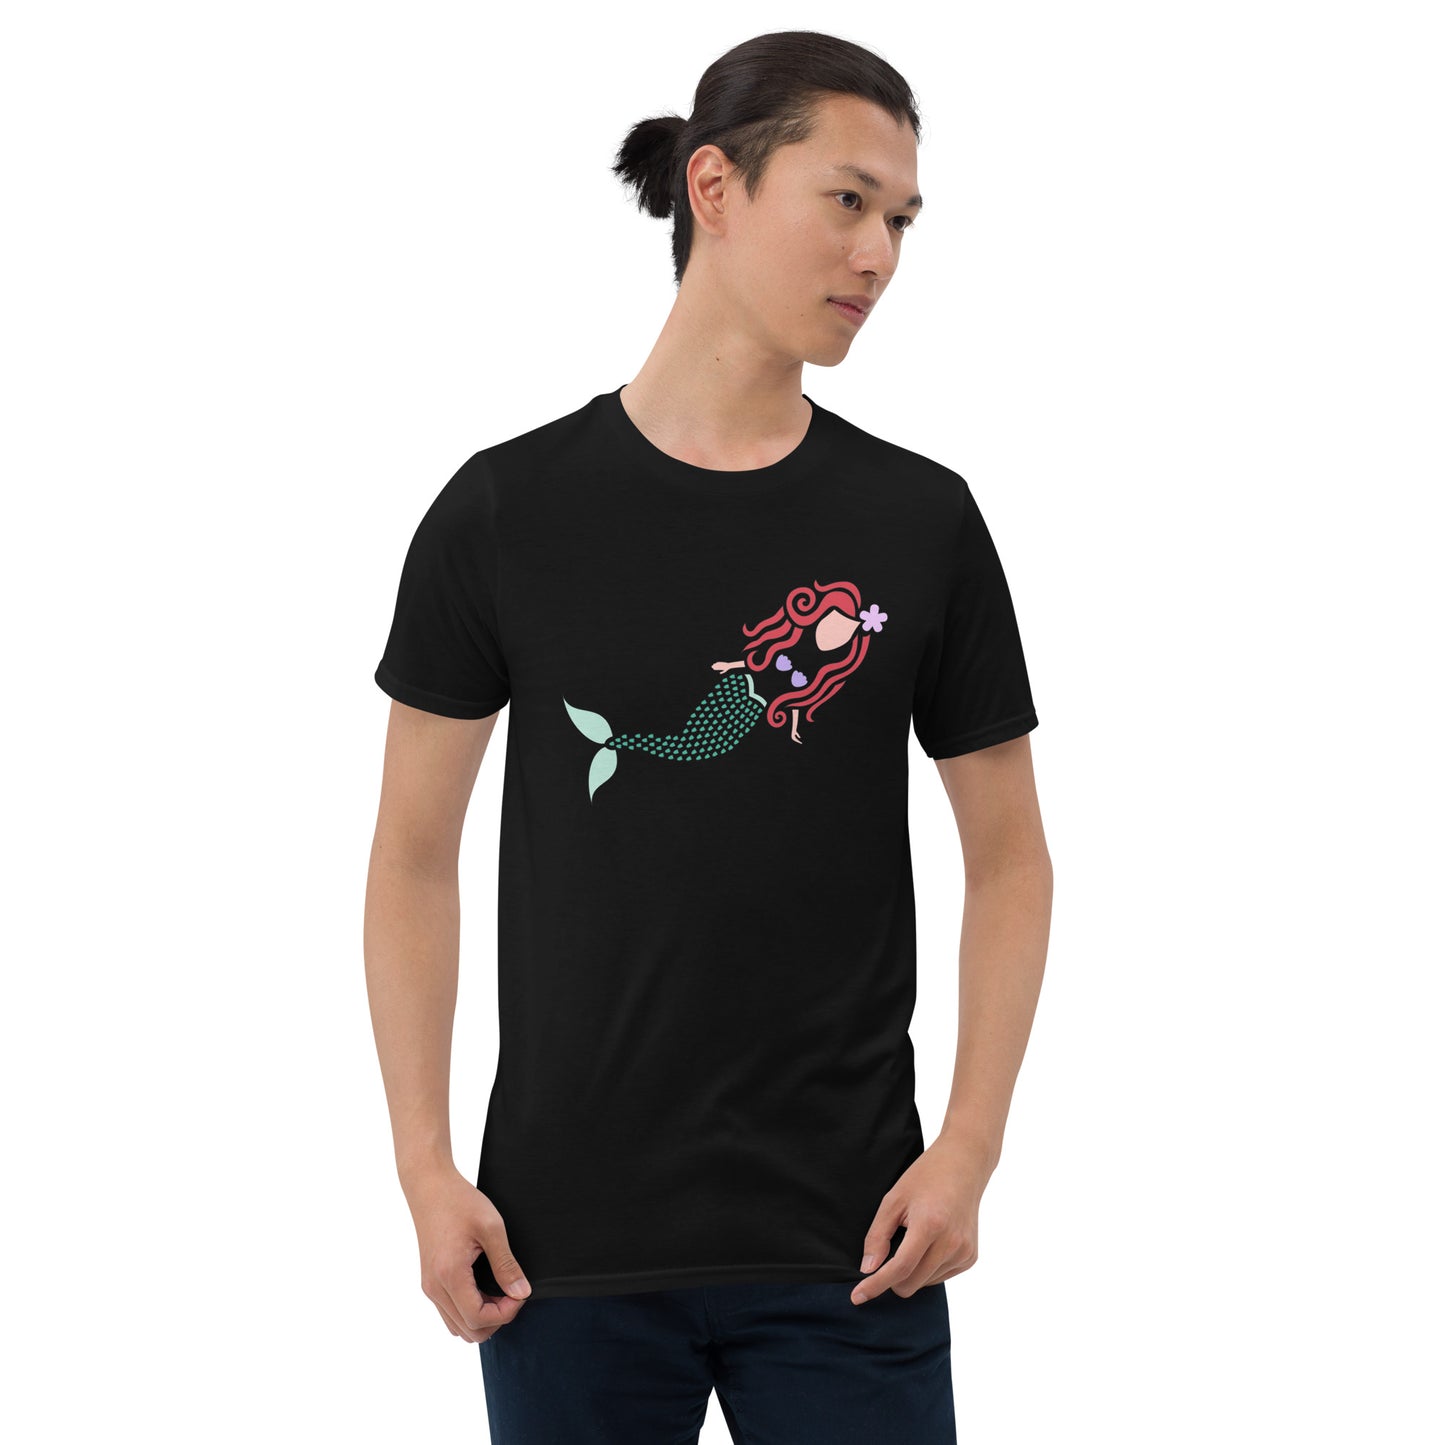 A Mermaid Under the Water Short-Sleeve Unisex T-Shirt